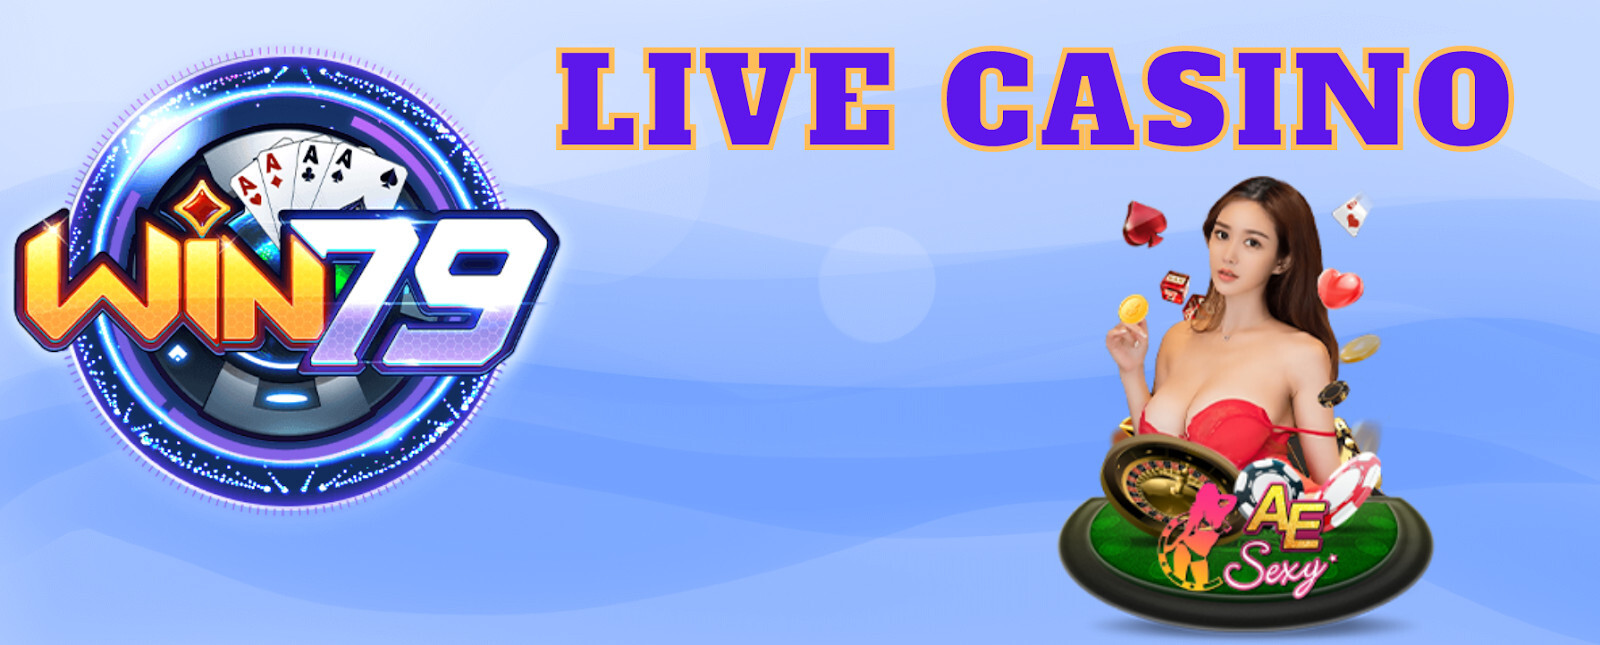 Trò chơi Live Casino Win79 là gì?